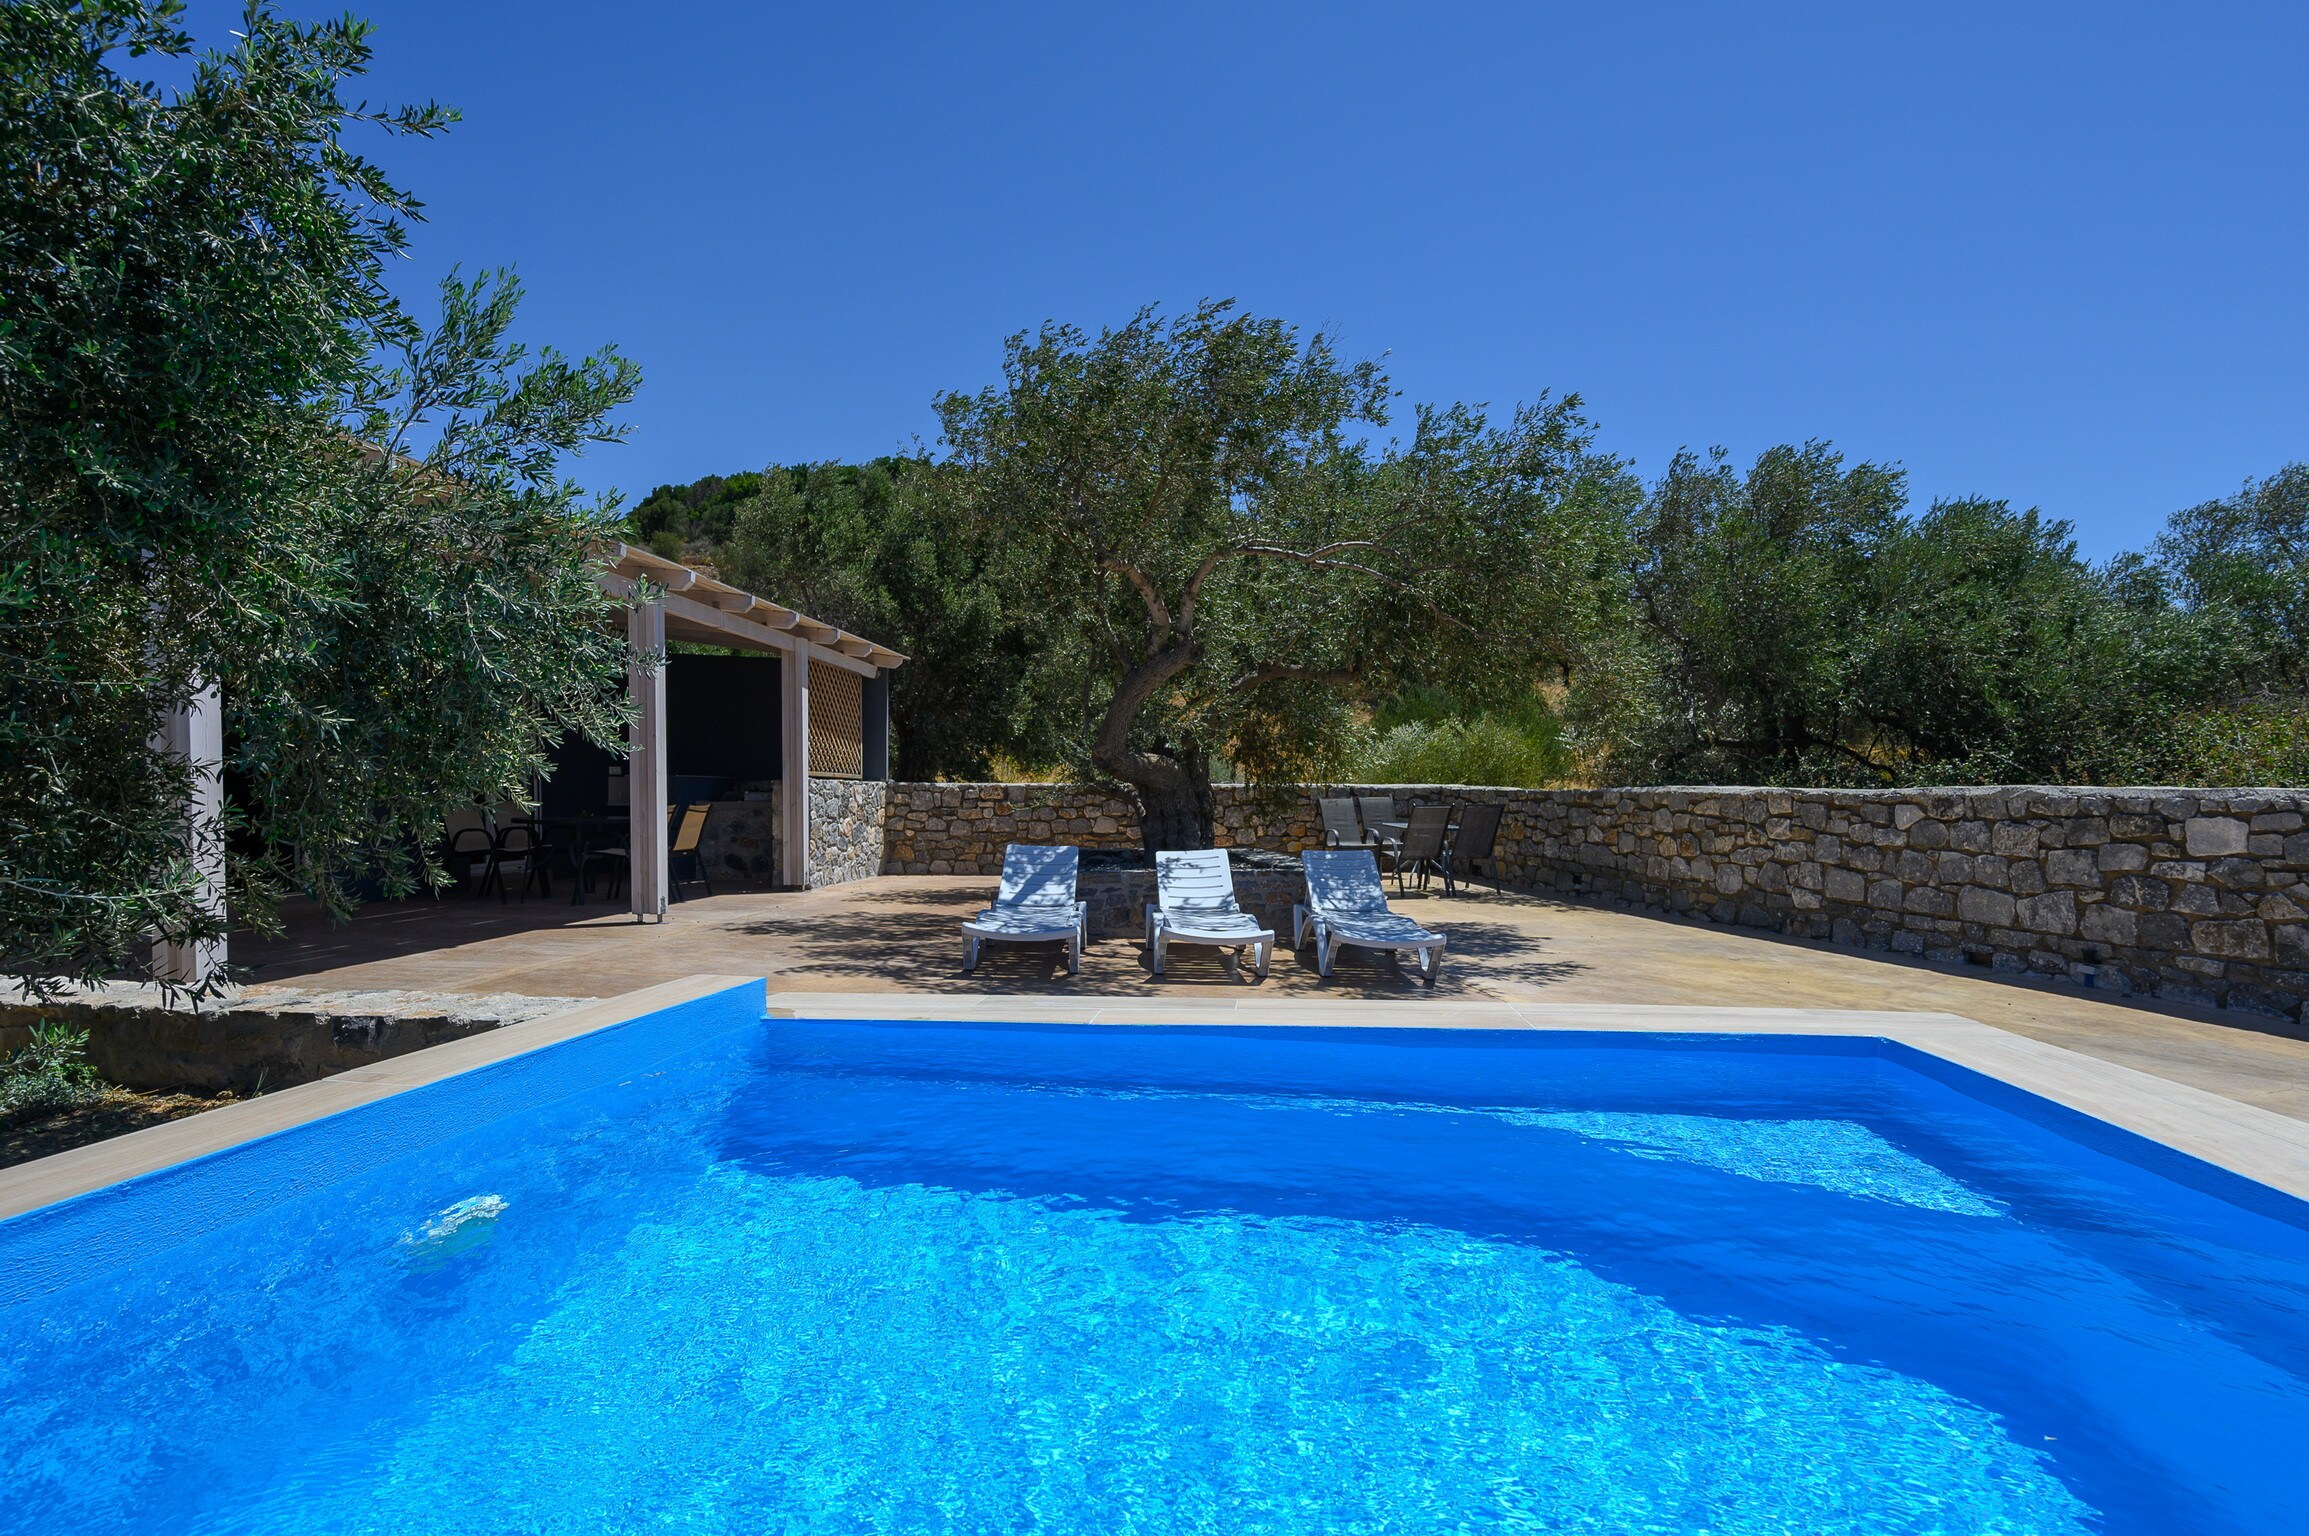 Swimming pool area of Cozy villa,Private pool,Near taverns,South coast,Lefkogia,Crete,Greece